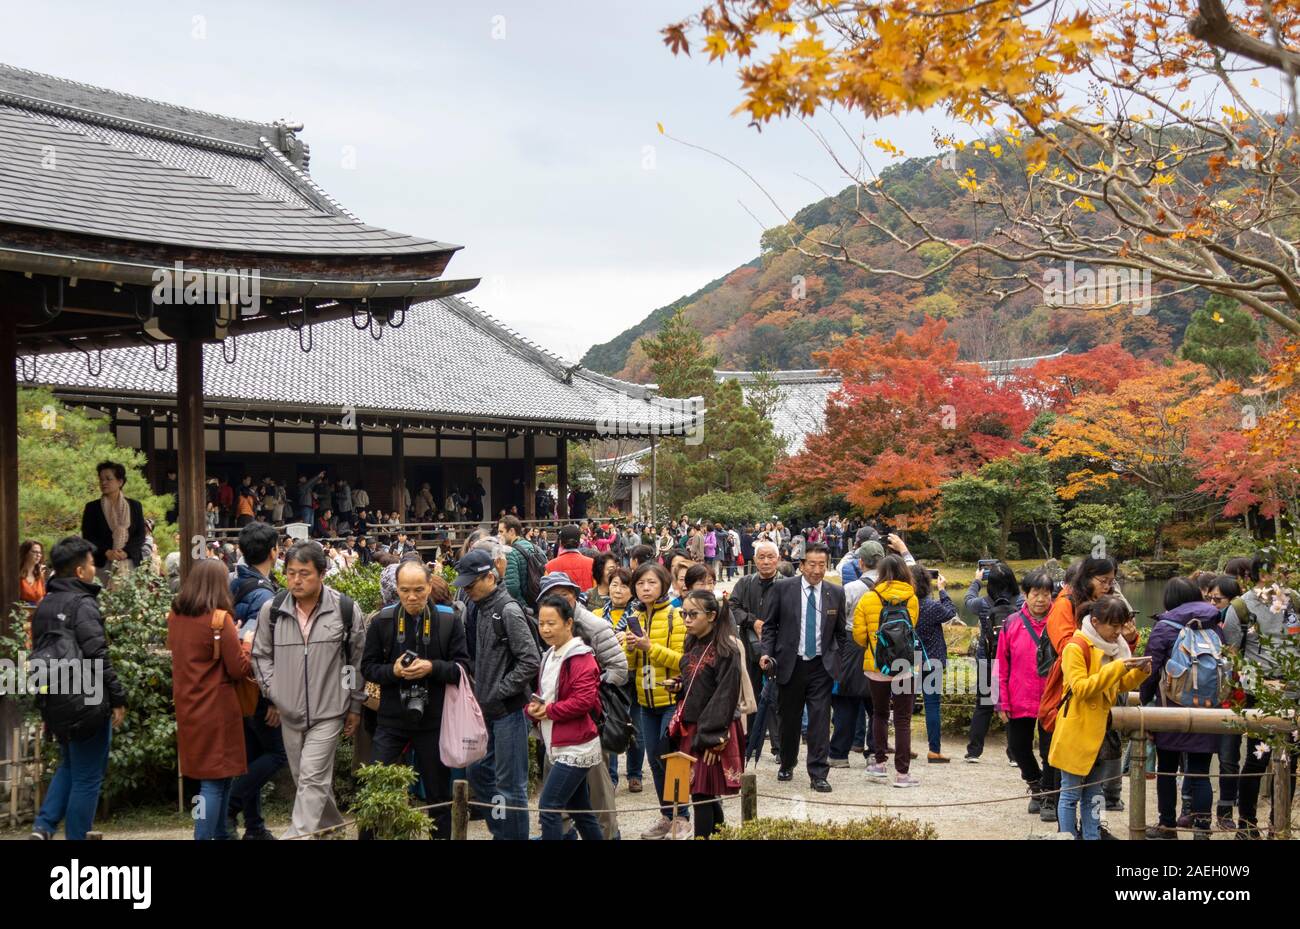 crowds of tourists at the Tenryū-ji Zen Buddhist temple, Kyoto, Japan Stock Photo